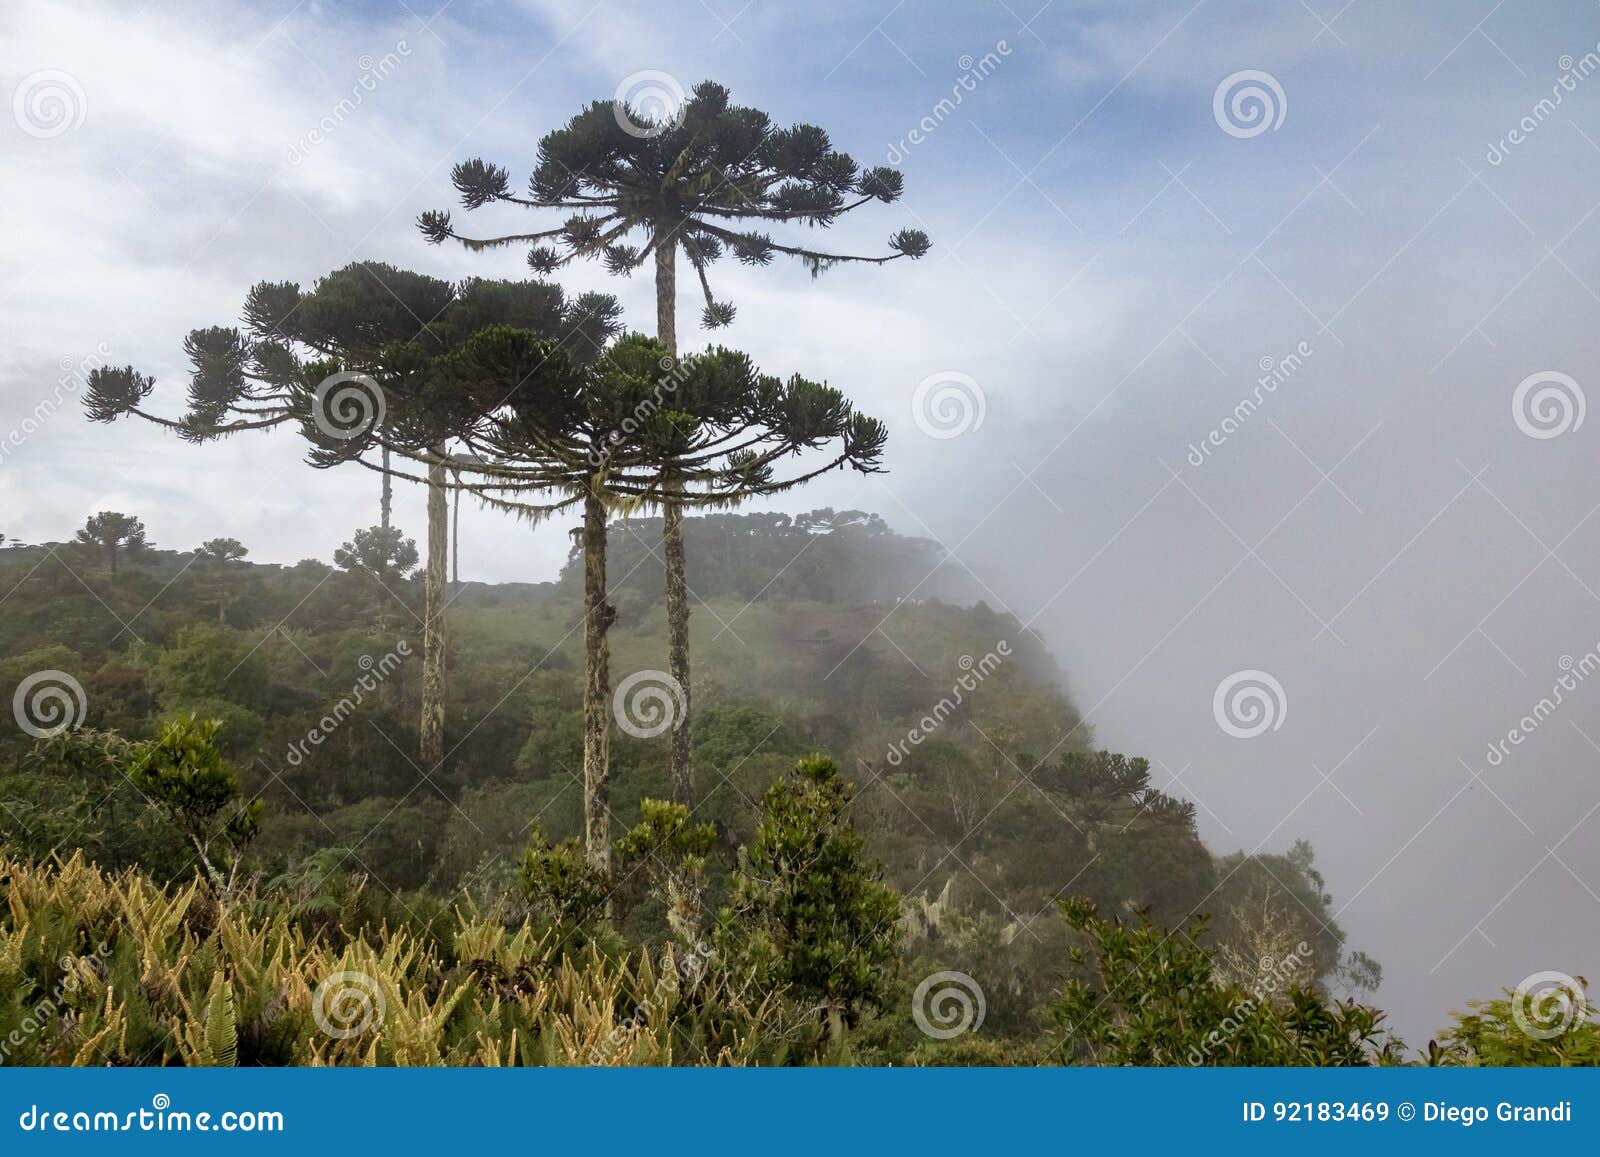 araucaria angustifolia brazilian pine on a foggy day at aparados da serra national park - rio grande do sul, brazil